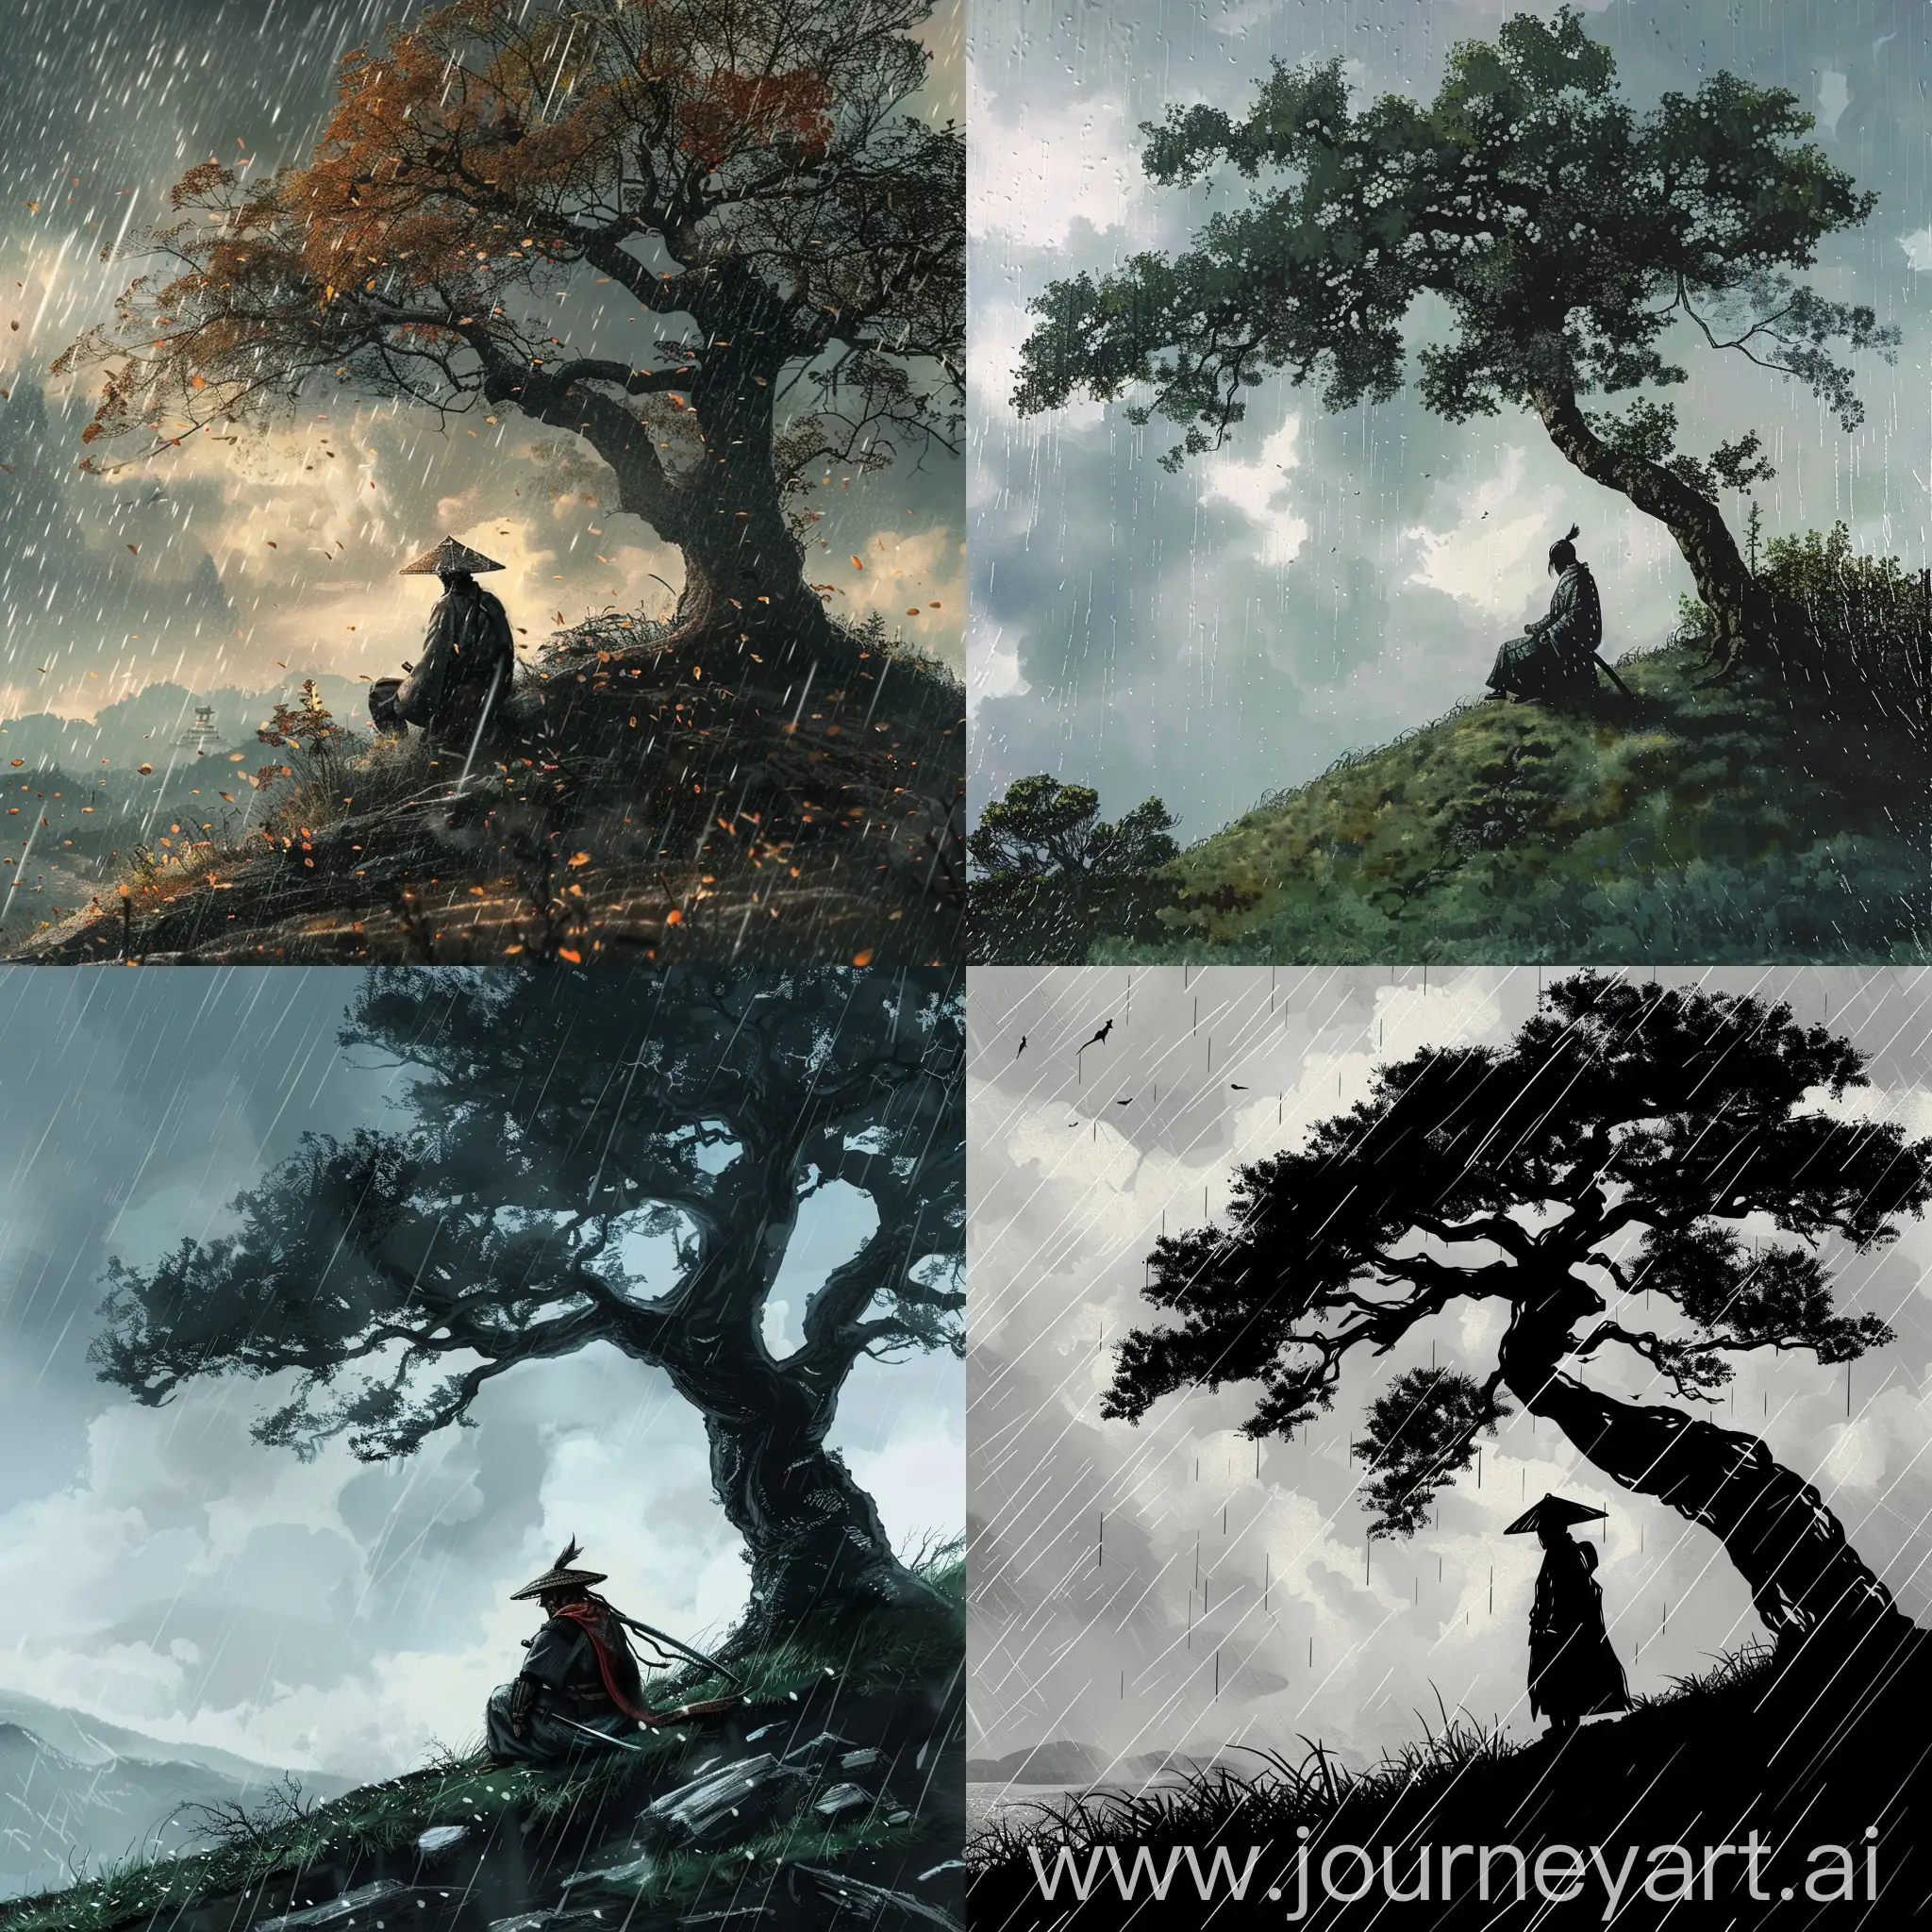 Solitary-Samurai-Contemplating-Beneath-Rainy-Hill-Tree